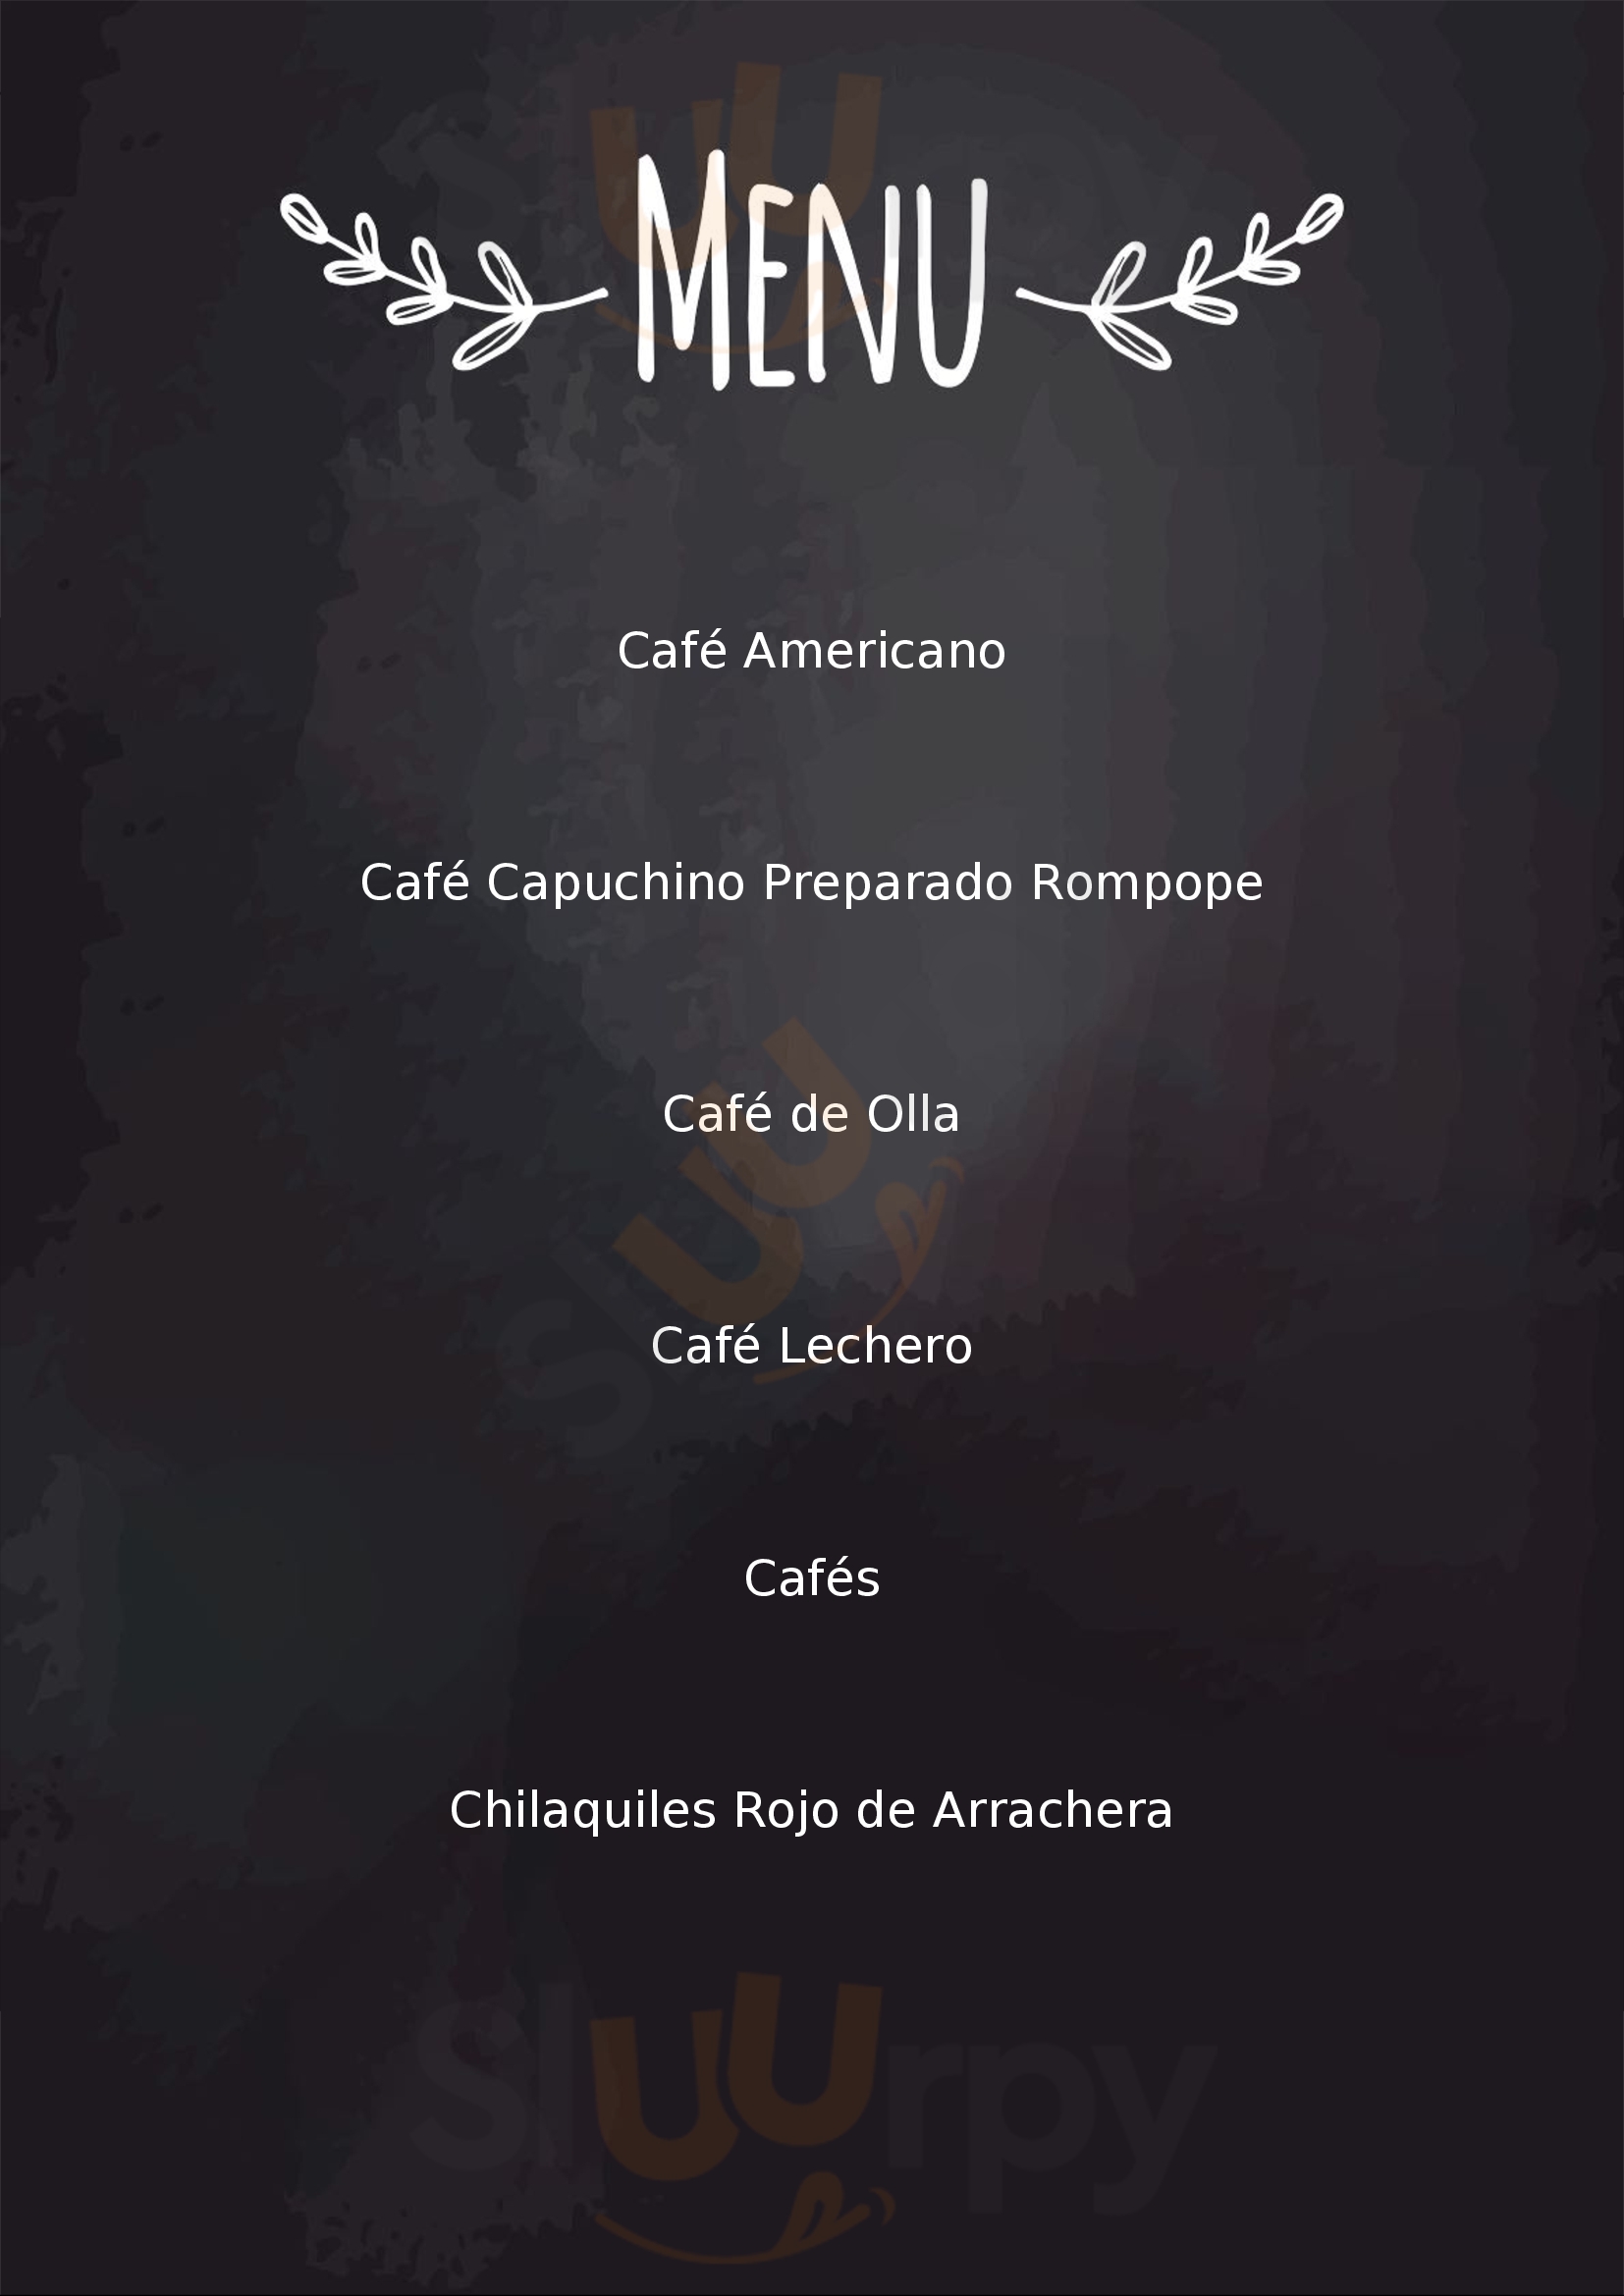 Cafe Andrade Playa del Carmen Menu - 1